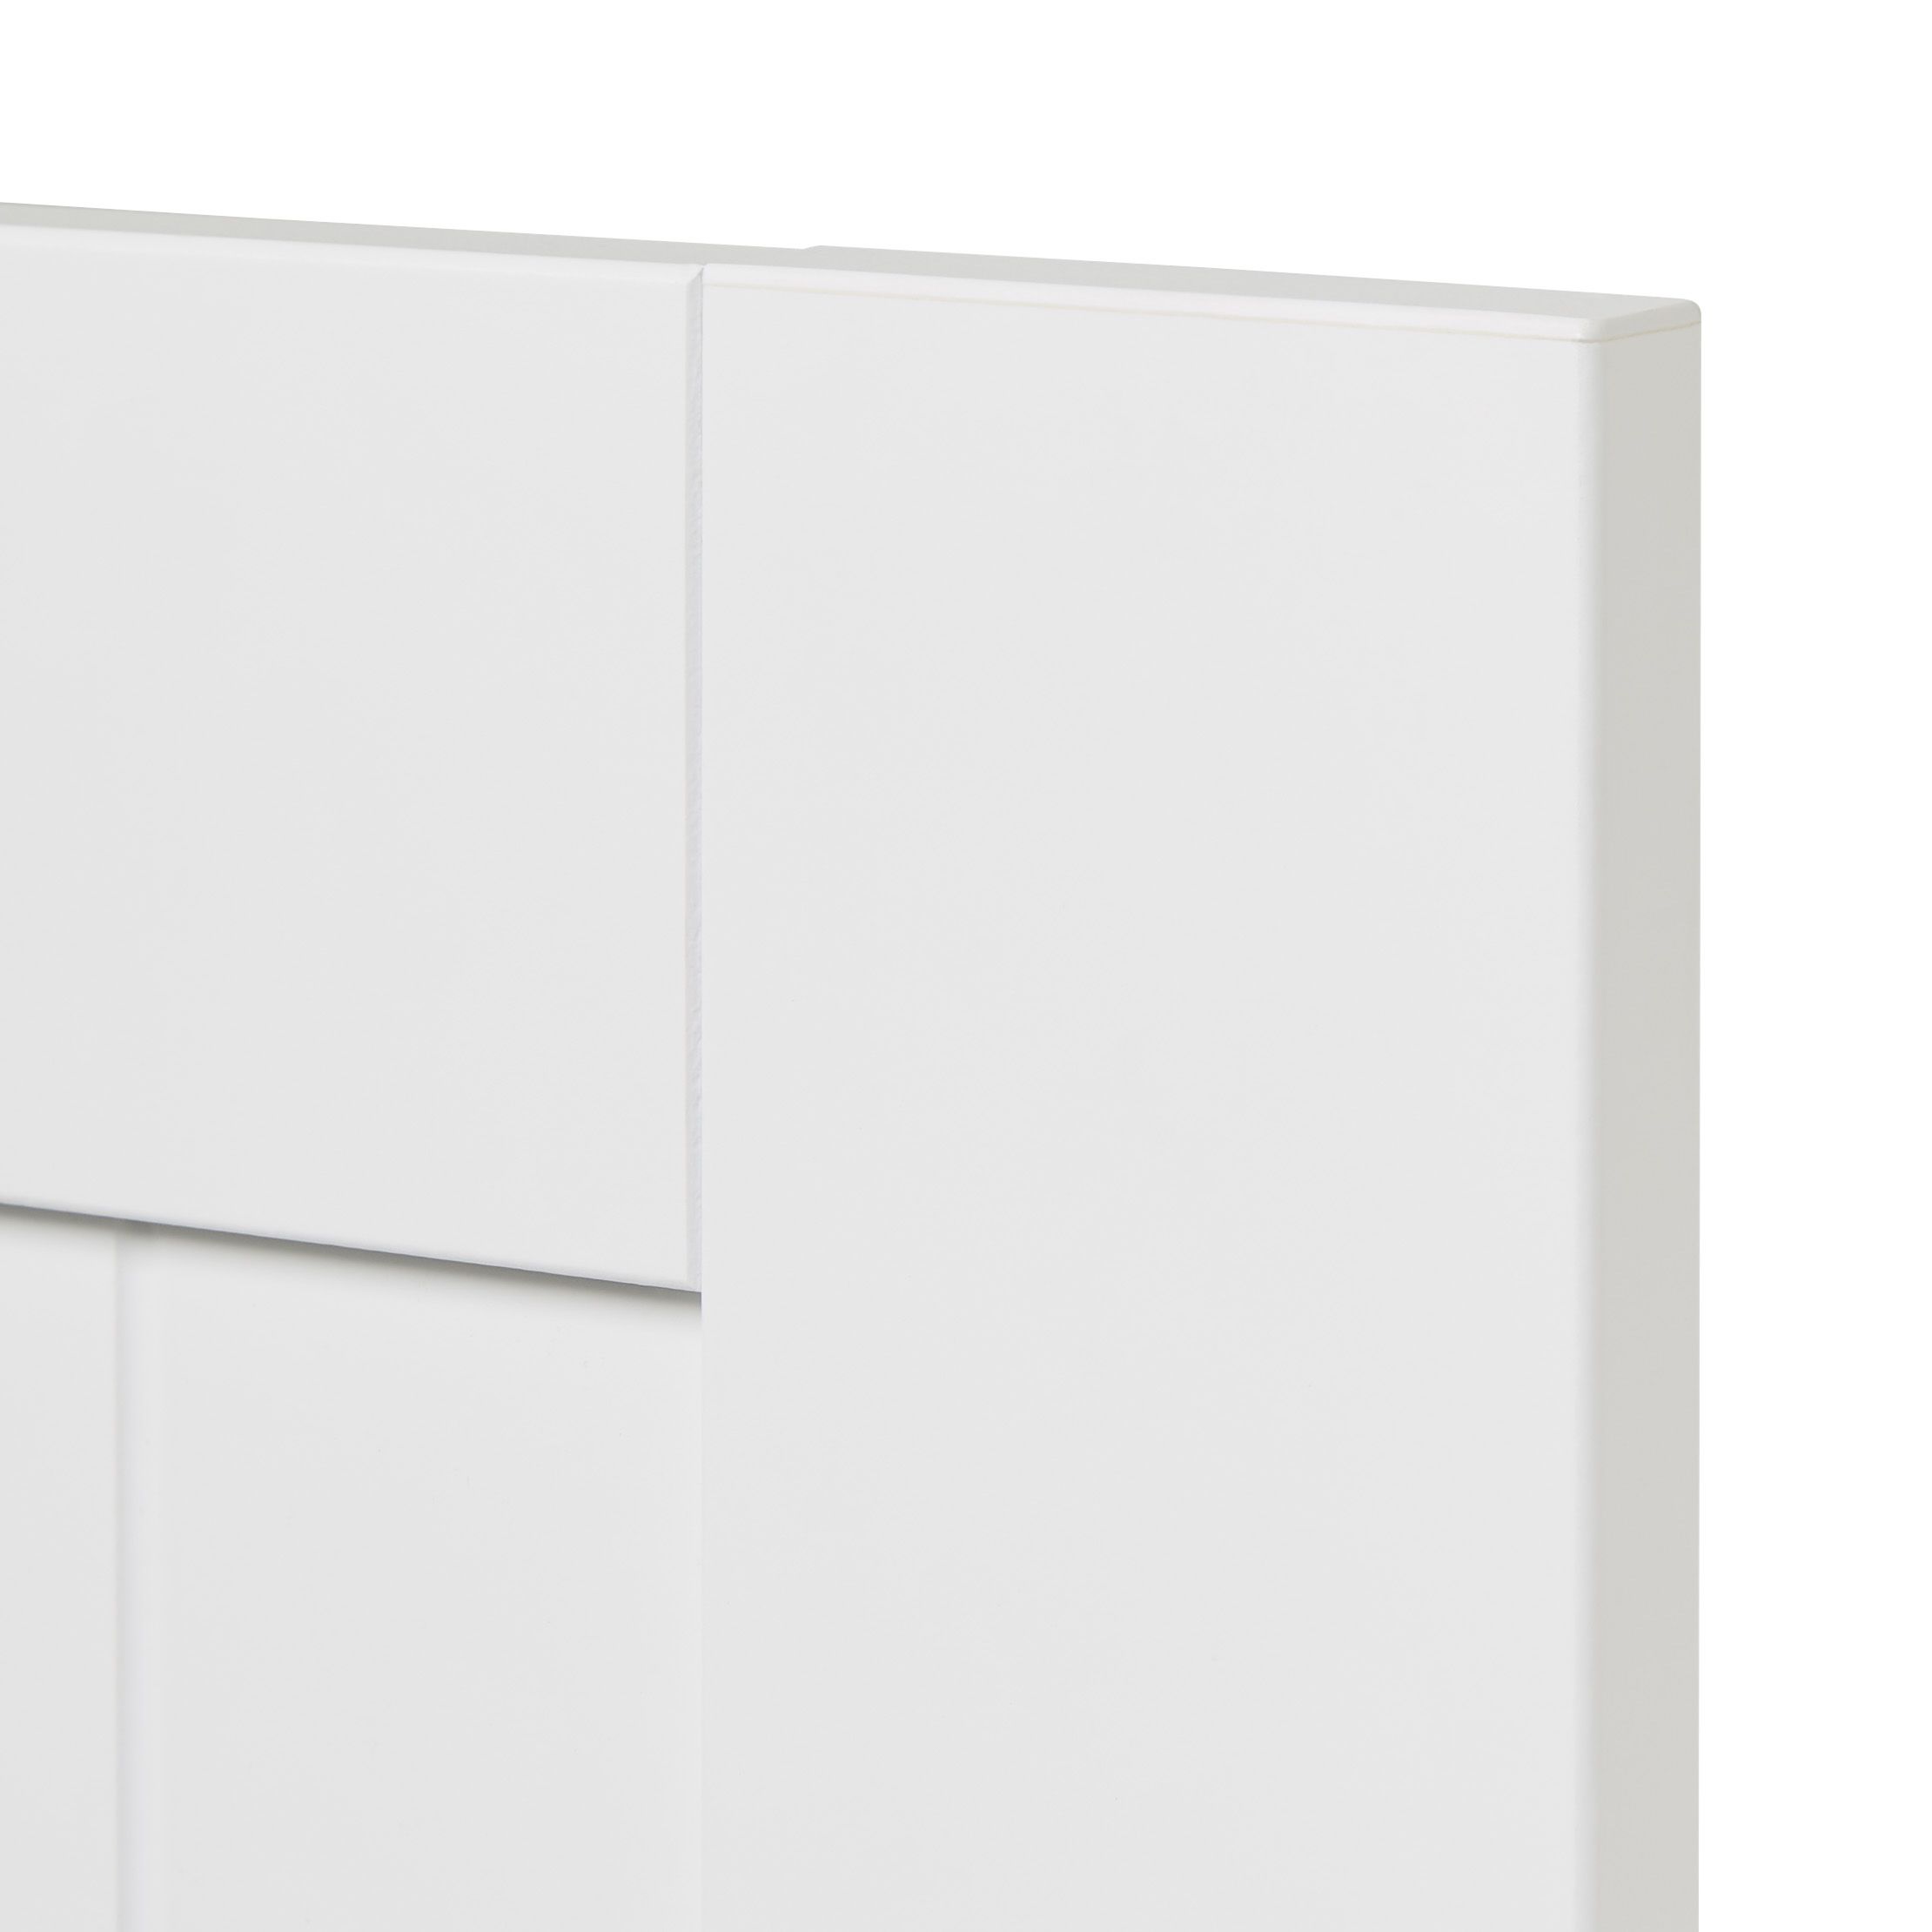 GoodHome Alpinia Matt white tongue & groove shaker Drawerline Cabinet door, (W)400mm (H)715mm (T)18mm